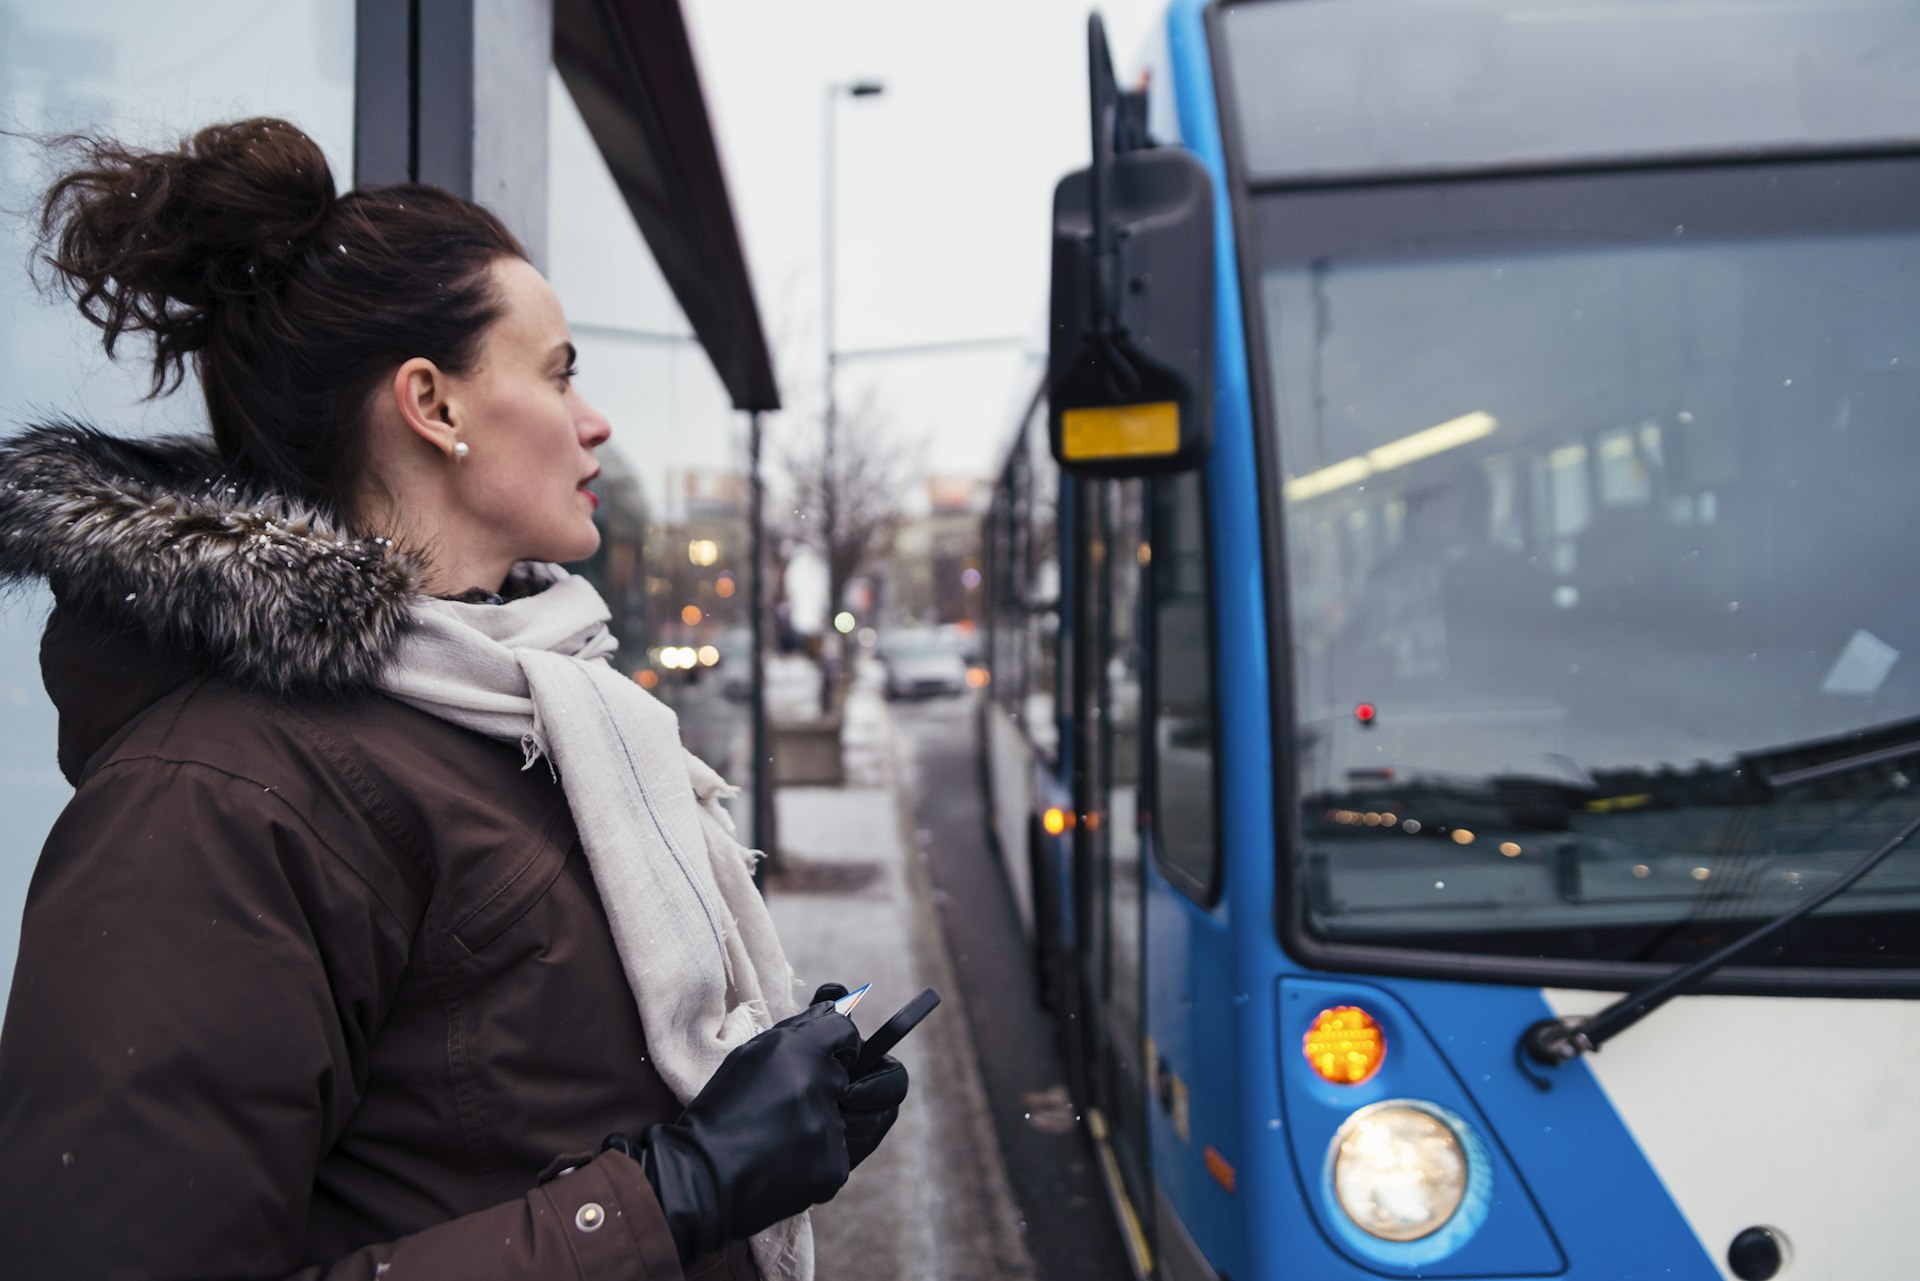 A woman waits for an approaching bus in Montréal, Québec, Canada